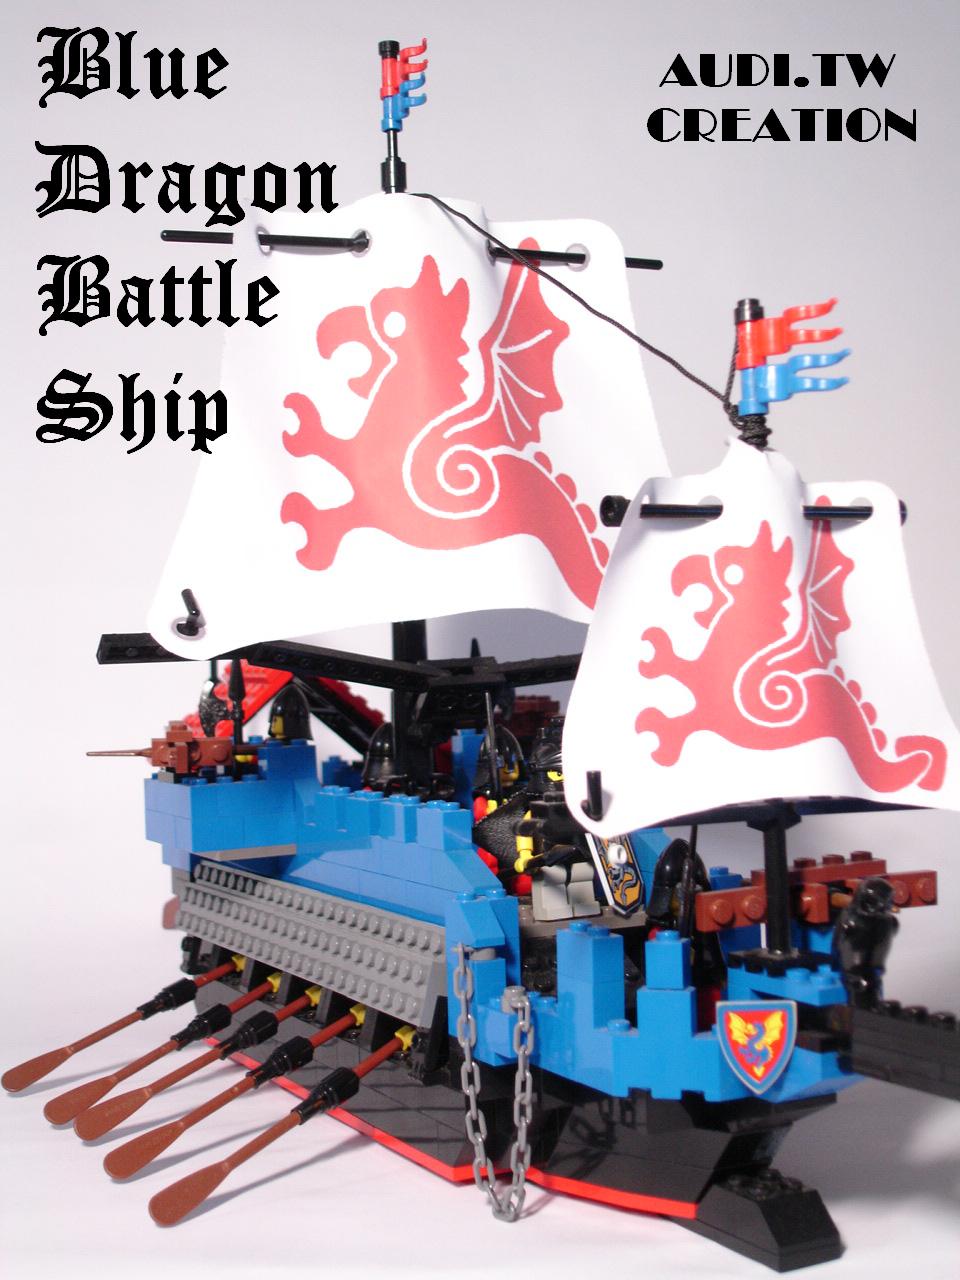 001-blue_dragon_battle_ship.jpg